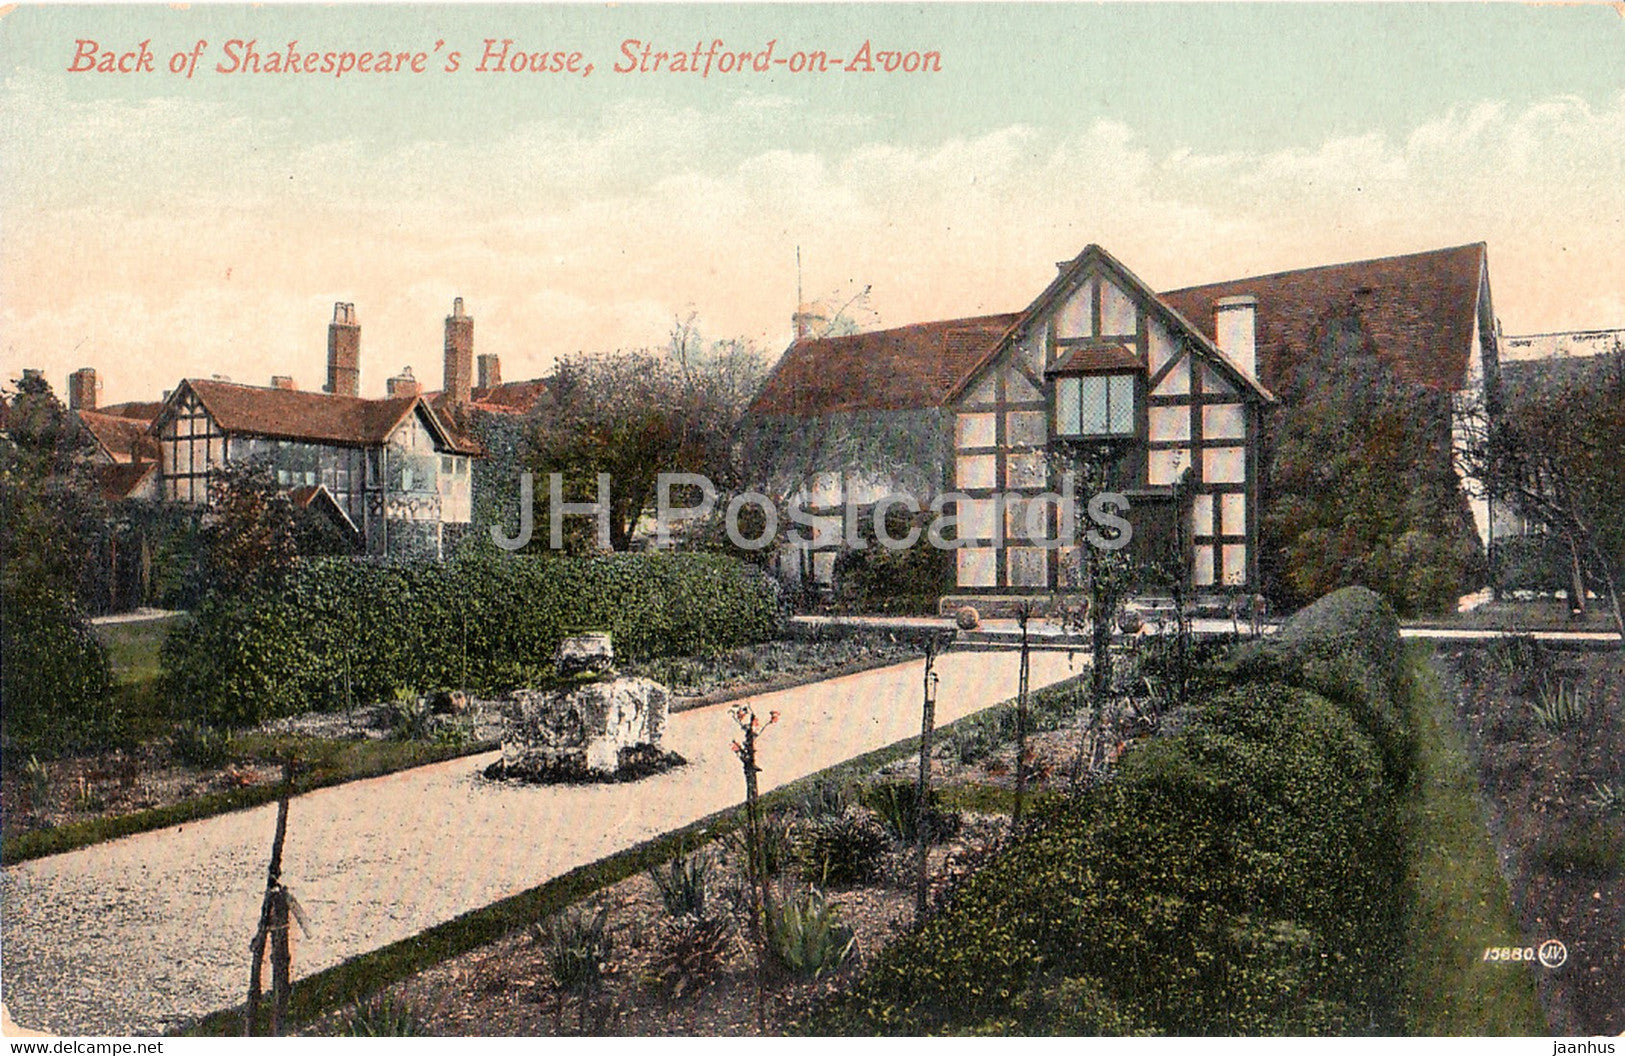 Stratford on Avon - Back of Shakespeare's House - 15880 - old postcard - England - United Kingdom - unused - JH Postcards